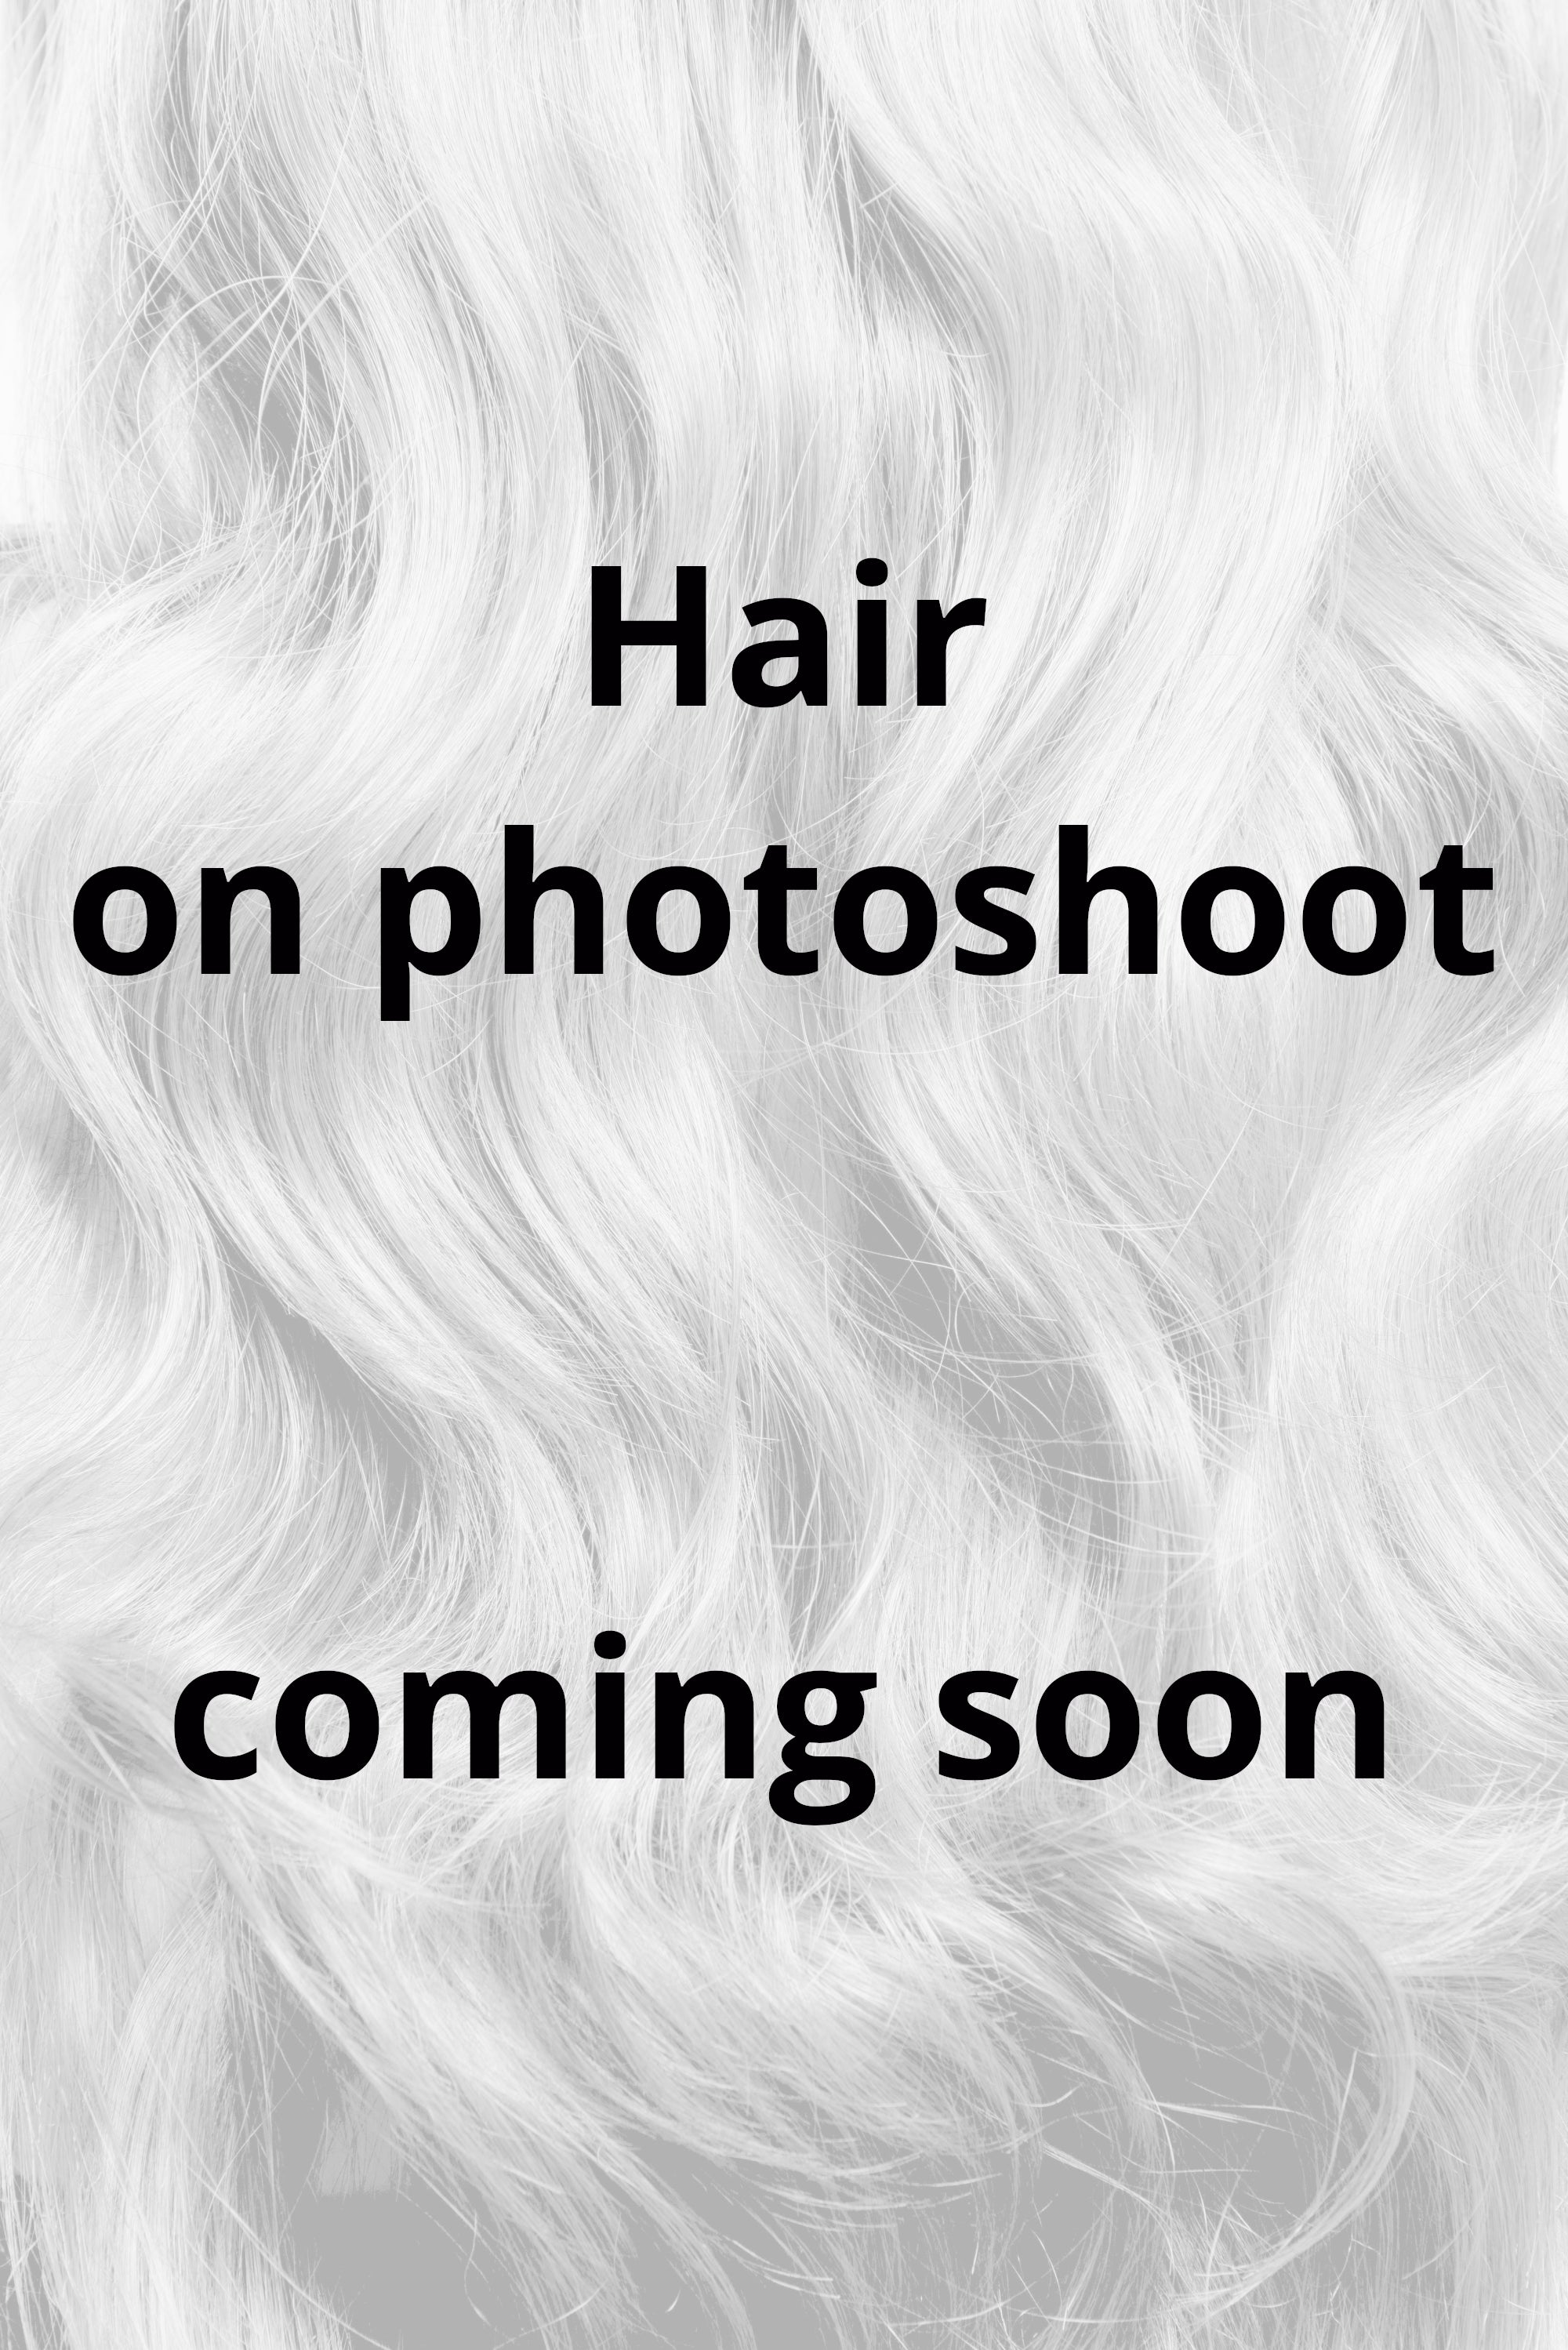 Behair professional Bulk hair "Premium" 26" (65cm) Natural Straight Light Almond #14 - 25g hair extensions